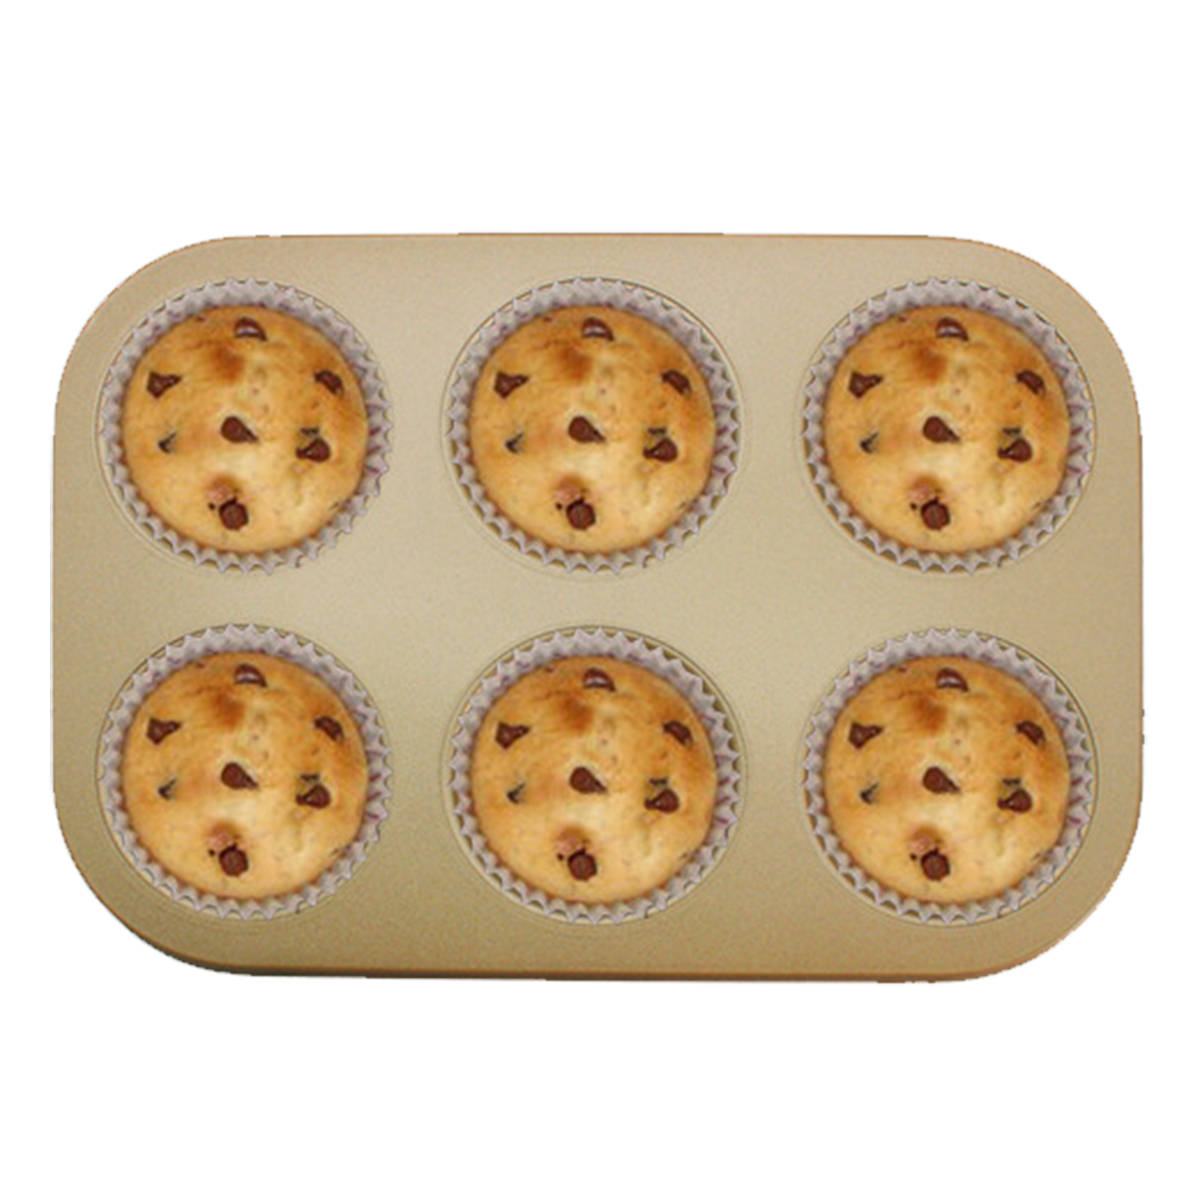 6pc-Muffin-Pan-Baking-Cooking-Tray-Mould-Round-Bake-Cup-Cake-GoldBlack-1502152-5